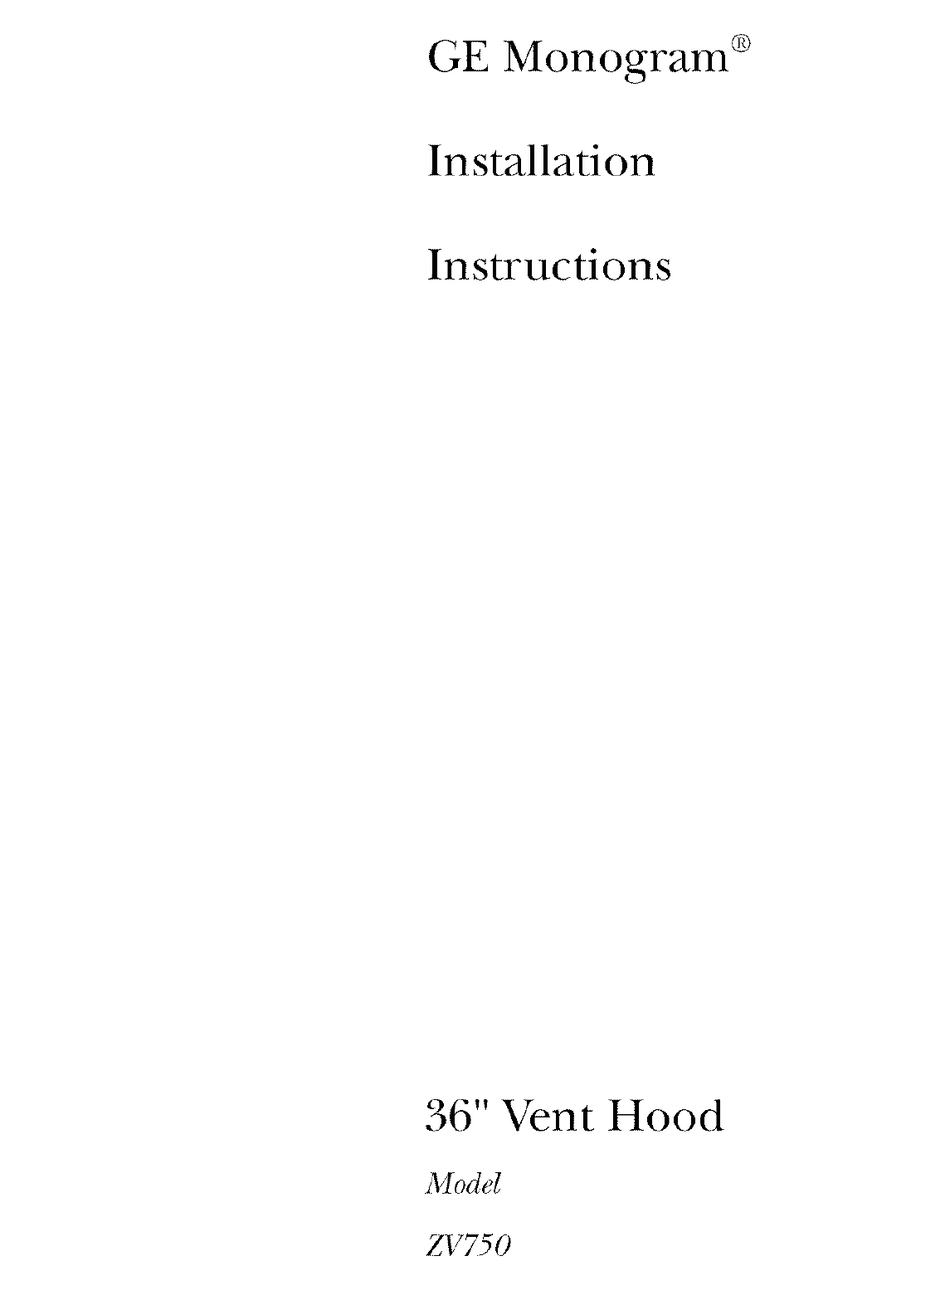 ge-monogram-zv750-installation-instructions-manual-pdf-download-manualslib